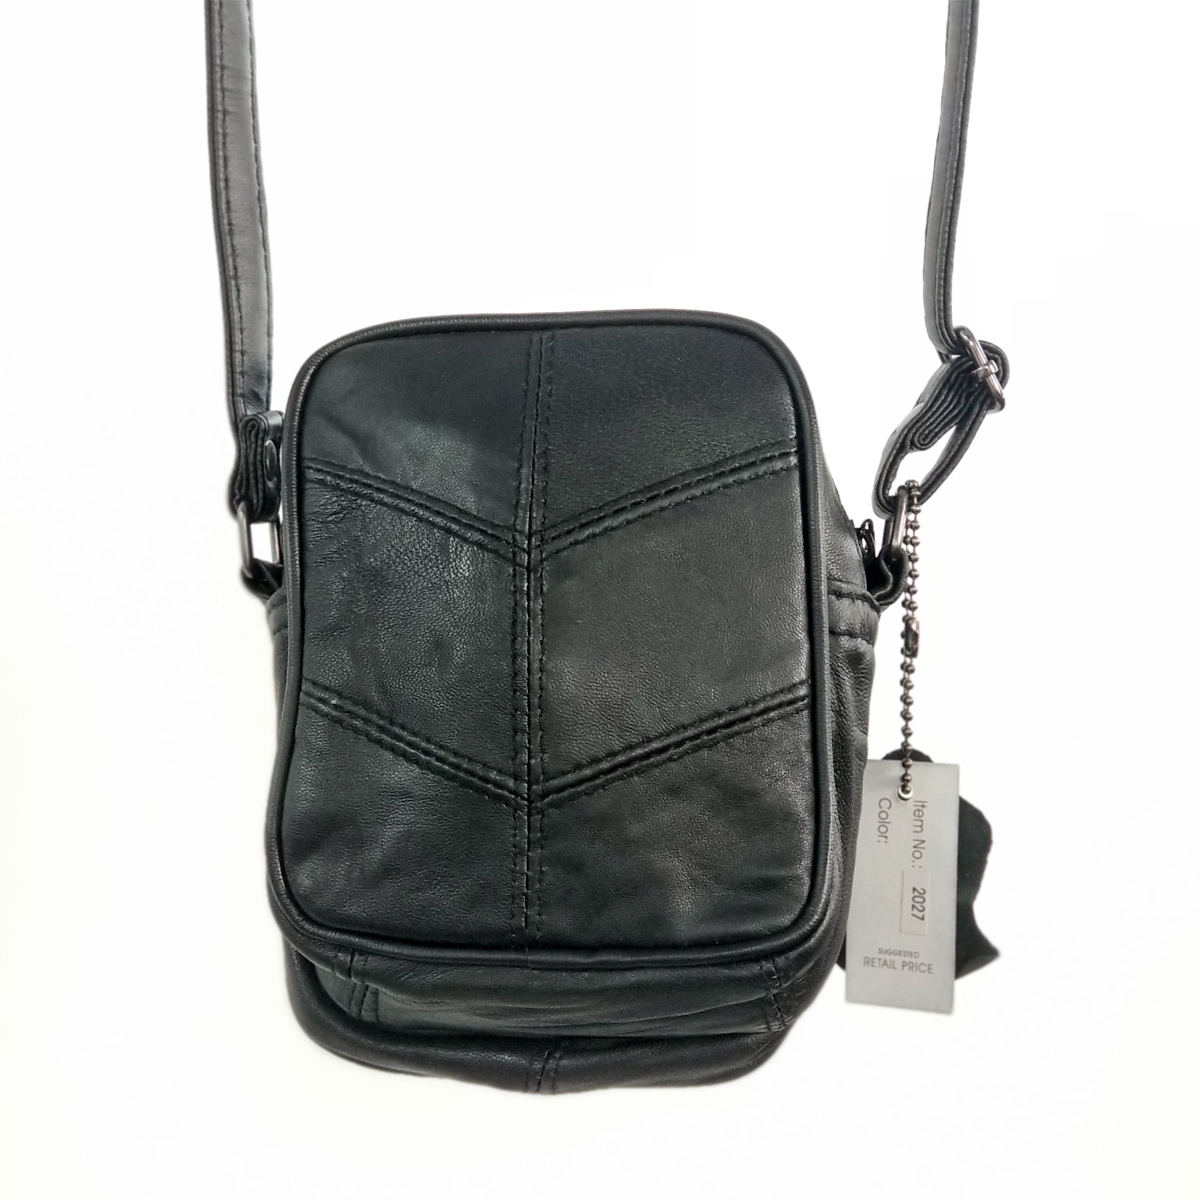 Piper Small Pebbled Leather Shoulder Bag | Michael Kors